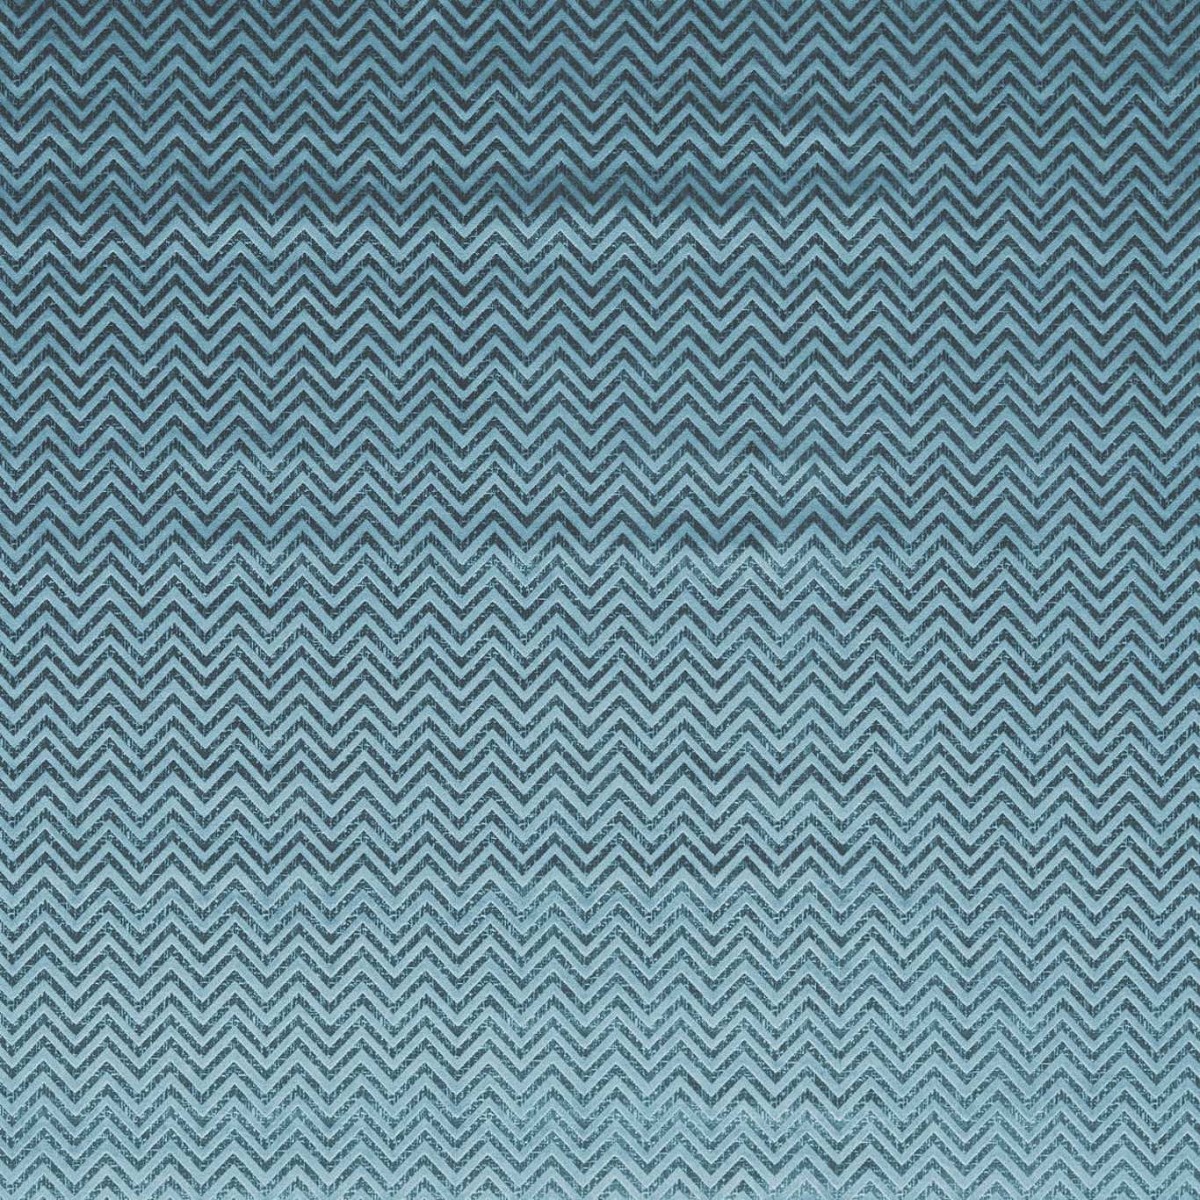 Nexus Teal Fabric by Studio G